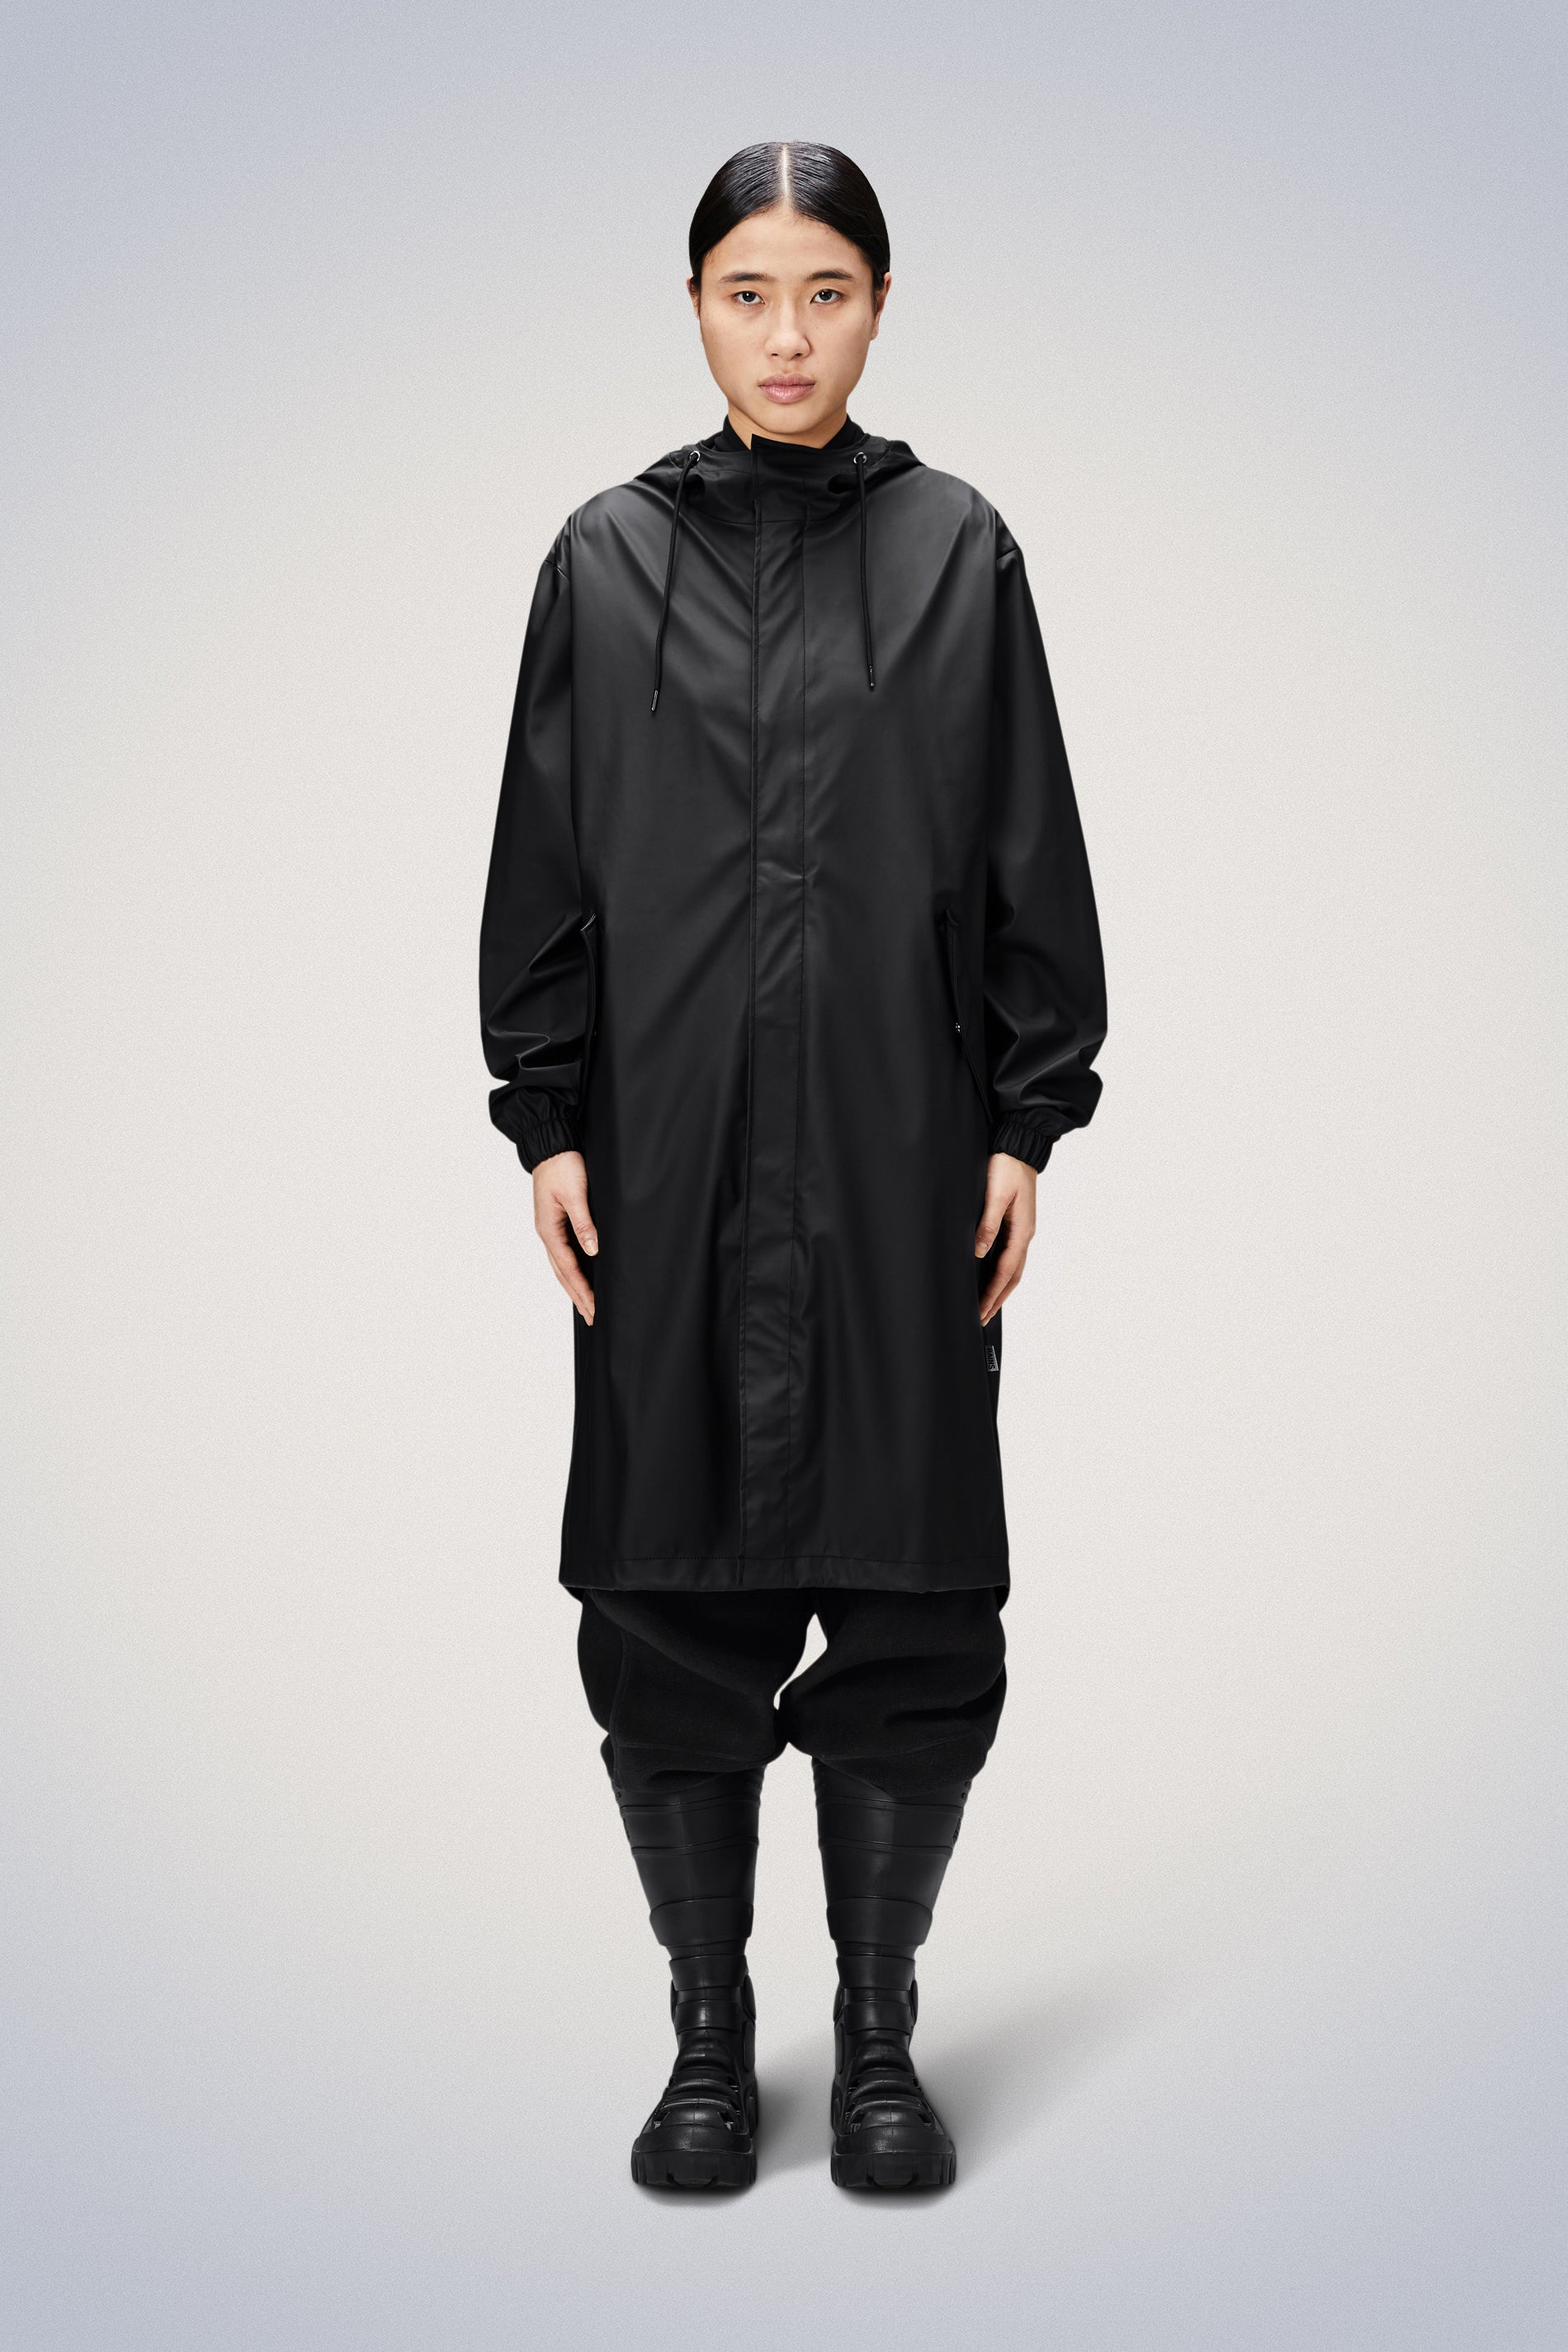 Women's Rain Jackets & Coats  Buy Modern Waterproof Coats here